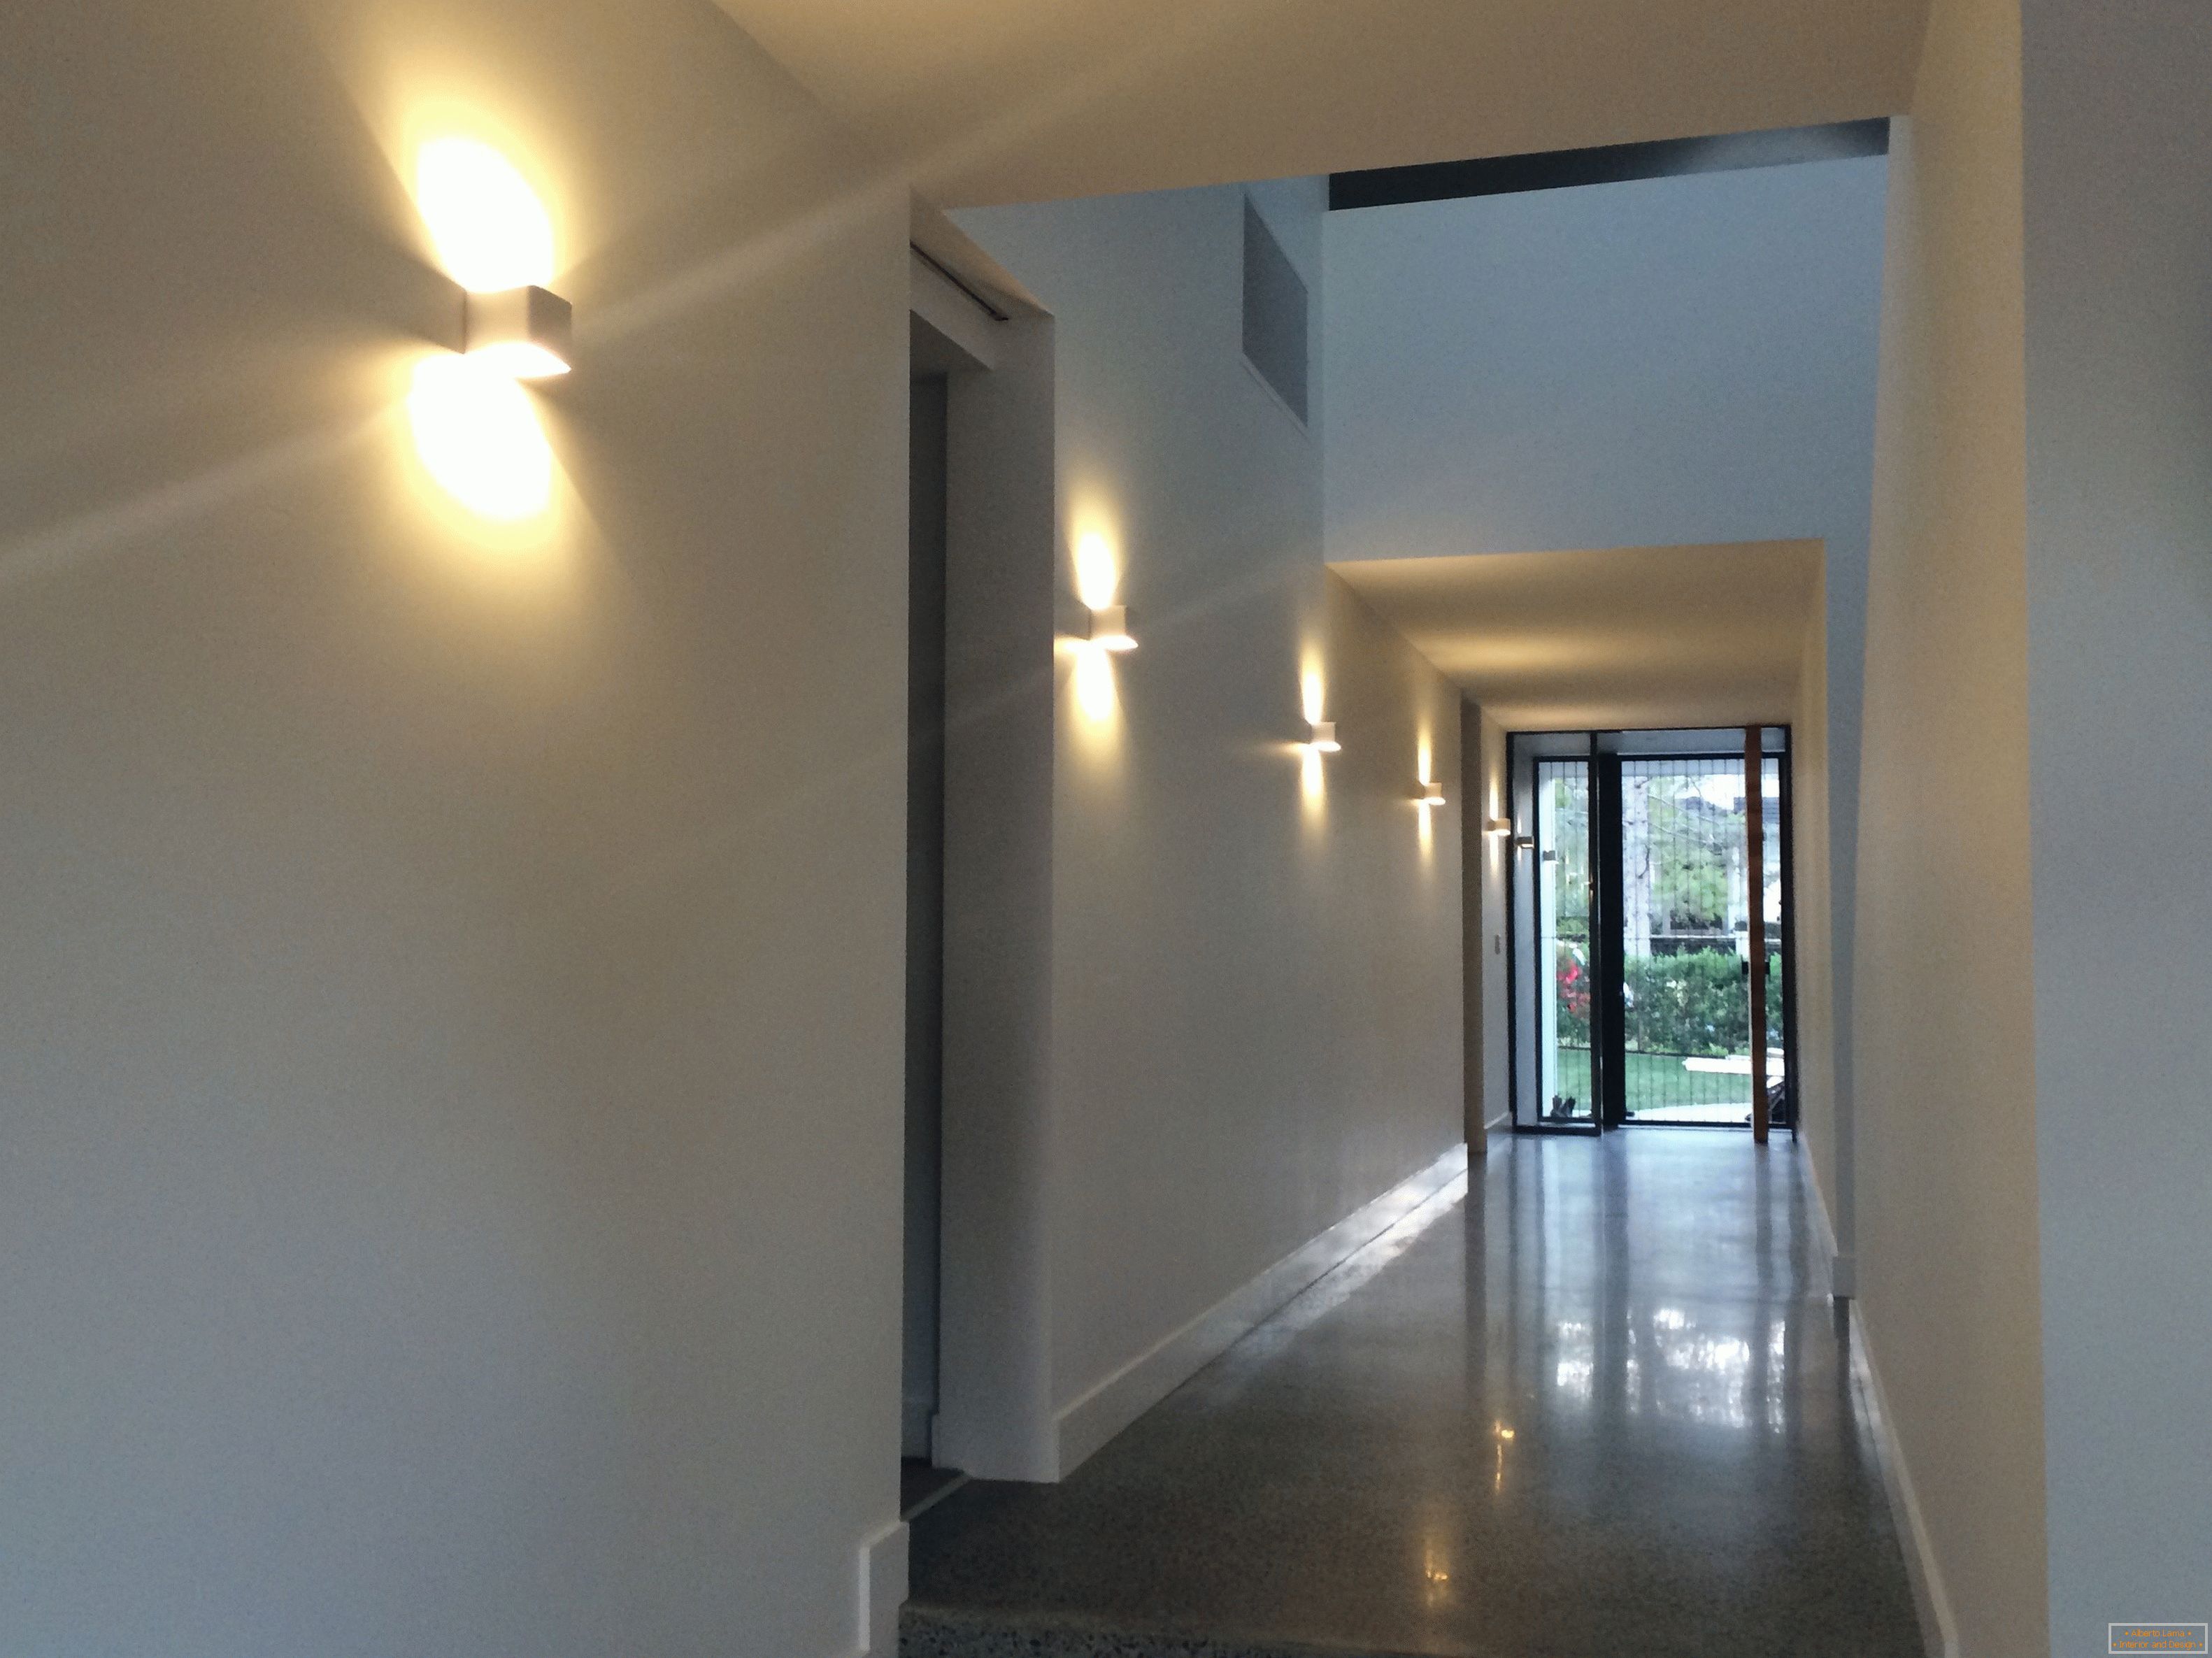 Corridor lighting